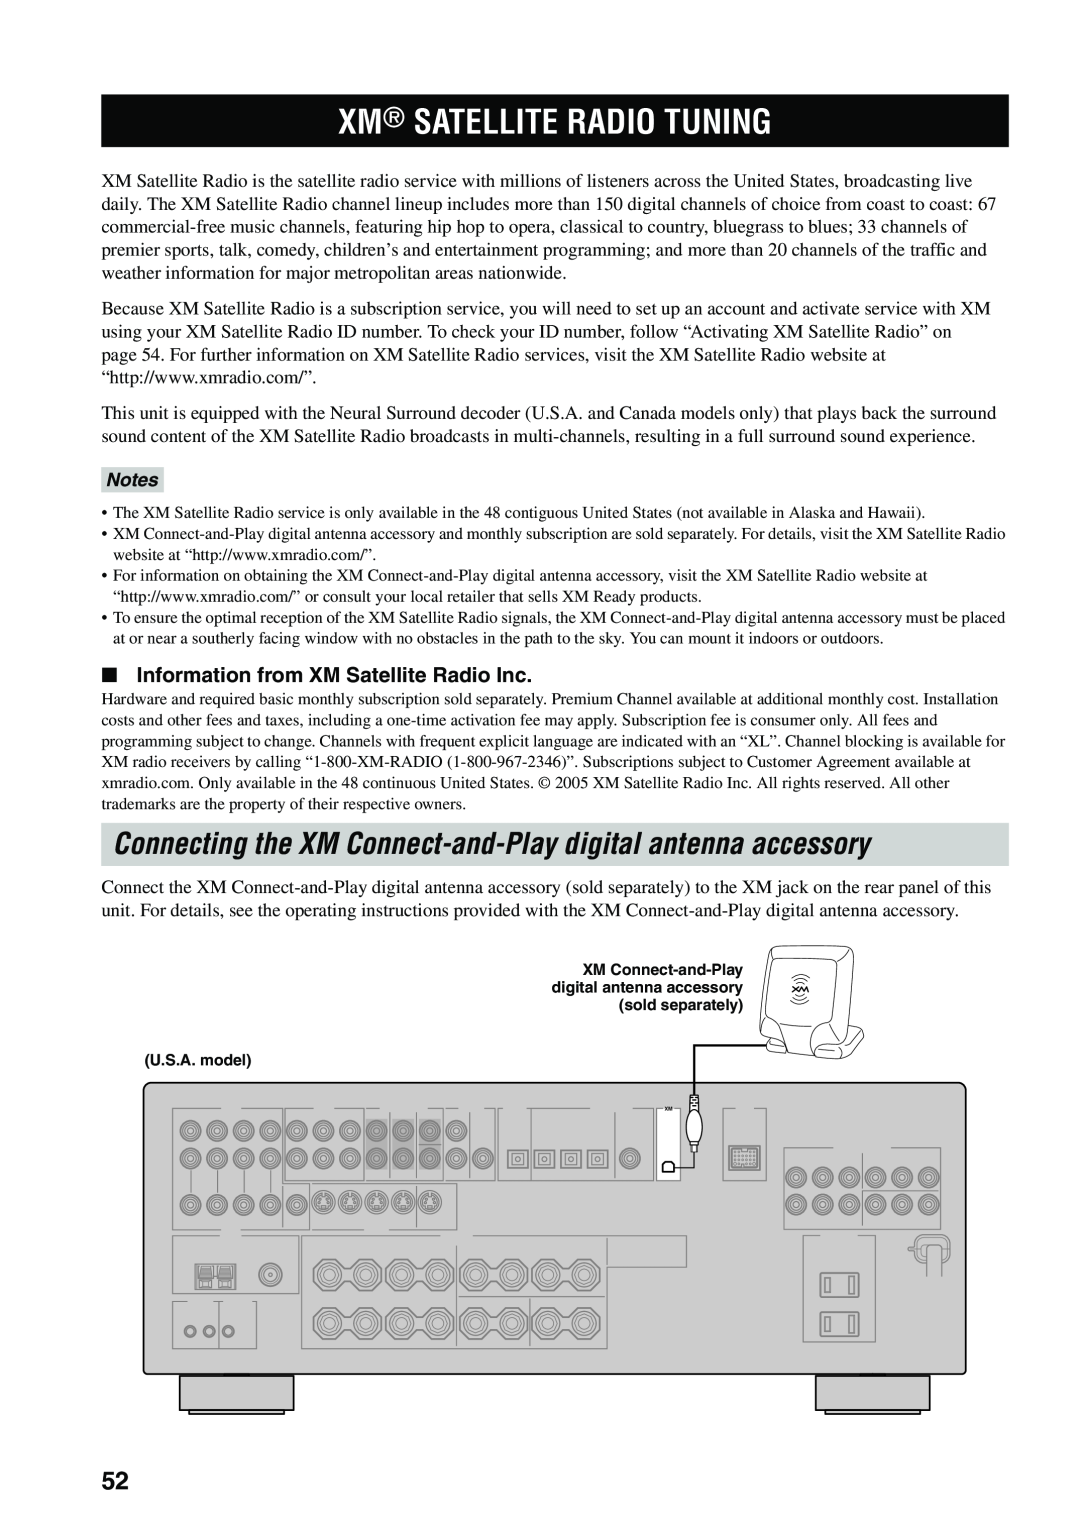 Yamaha RX-V559 owner manual Xm Satellite Radio Tuning, Information from XM Satellite Radio Inc, Notes 